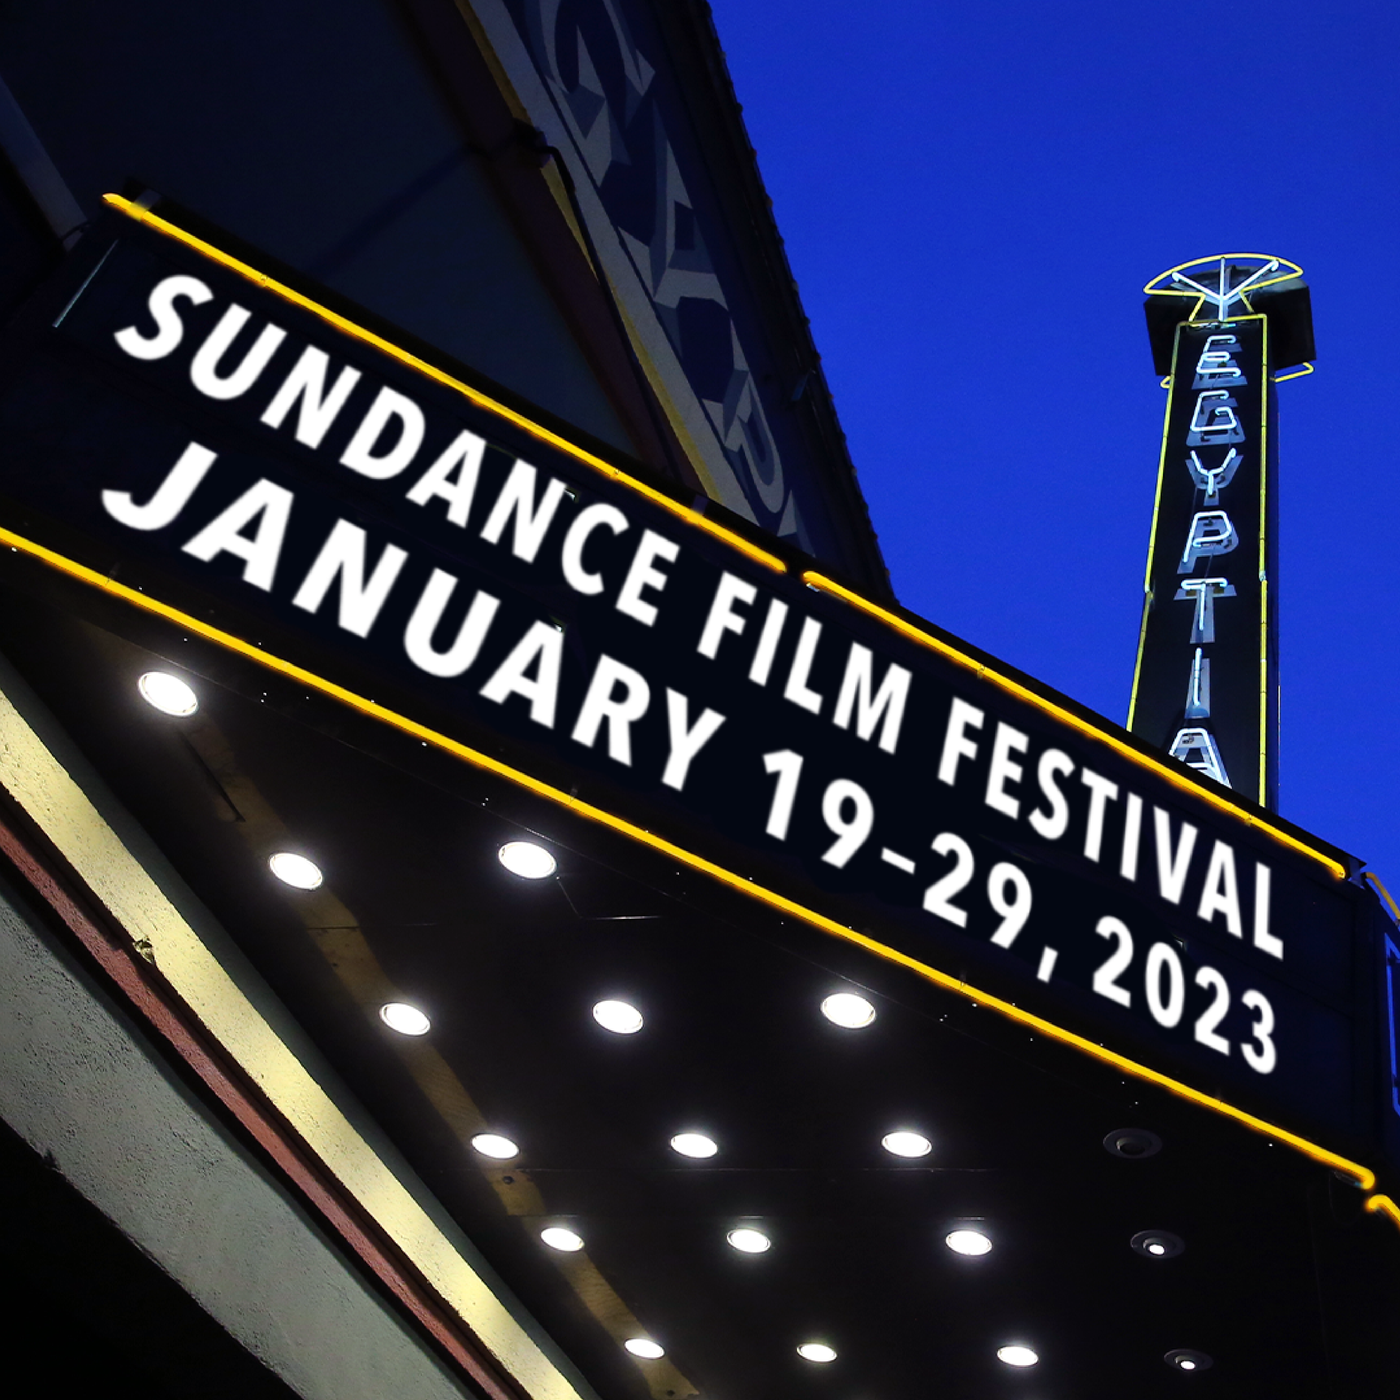 Sundance Film Festival 2023 Lineup Includes 'Cat Person'